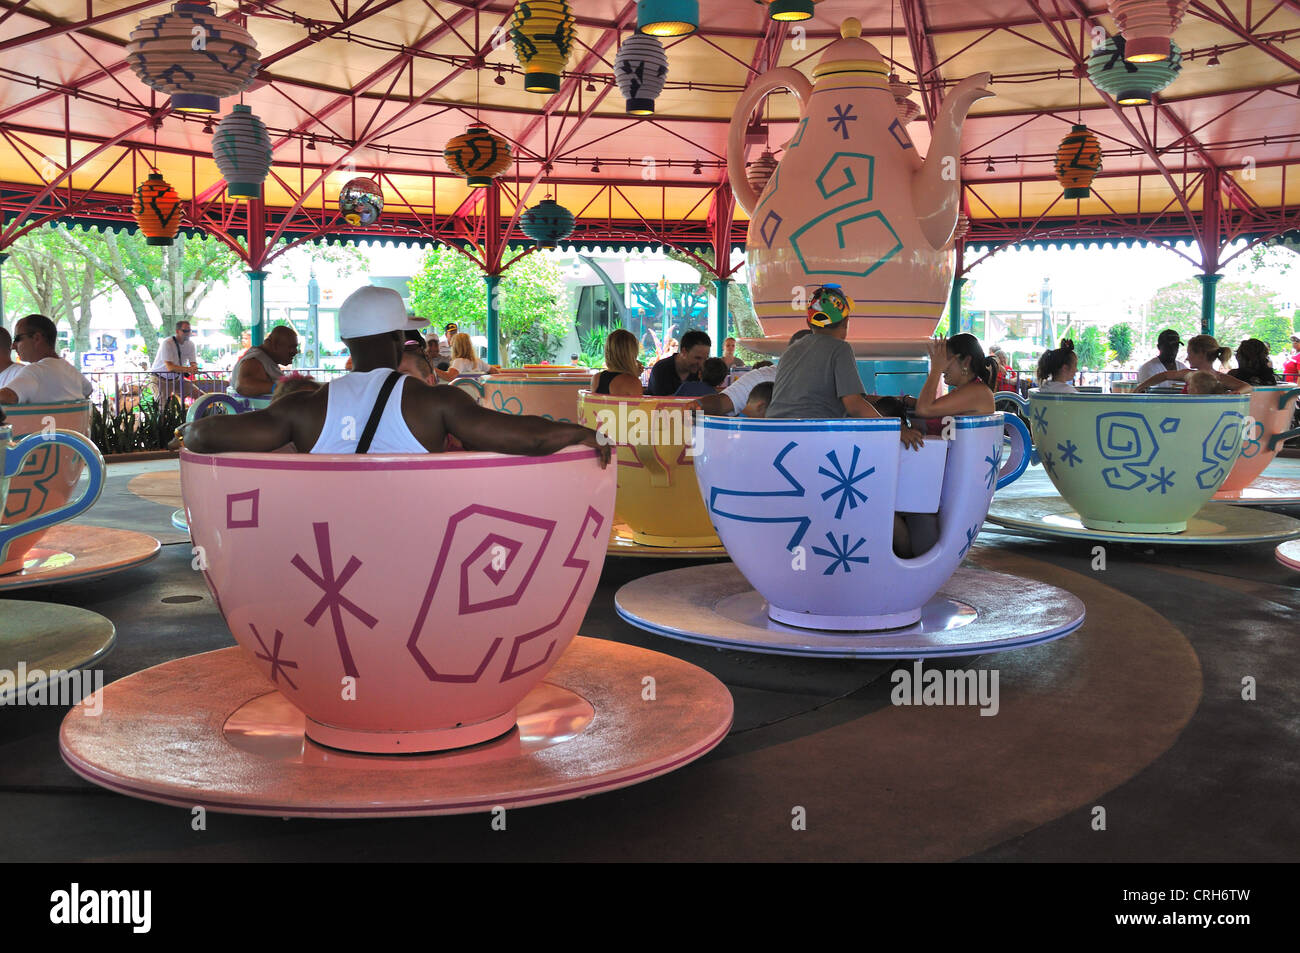 Tea cup ride in the Magic Kingdom at Disney World Stock Photo - Alamy